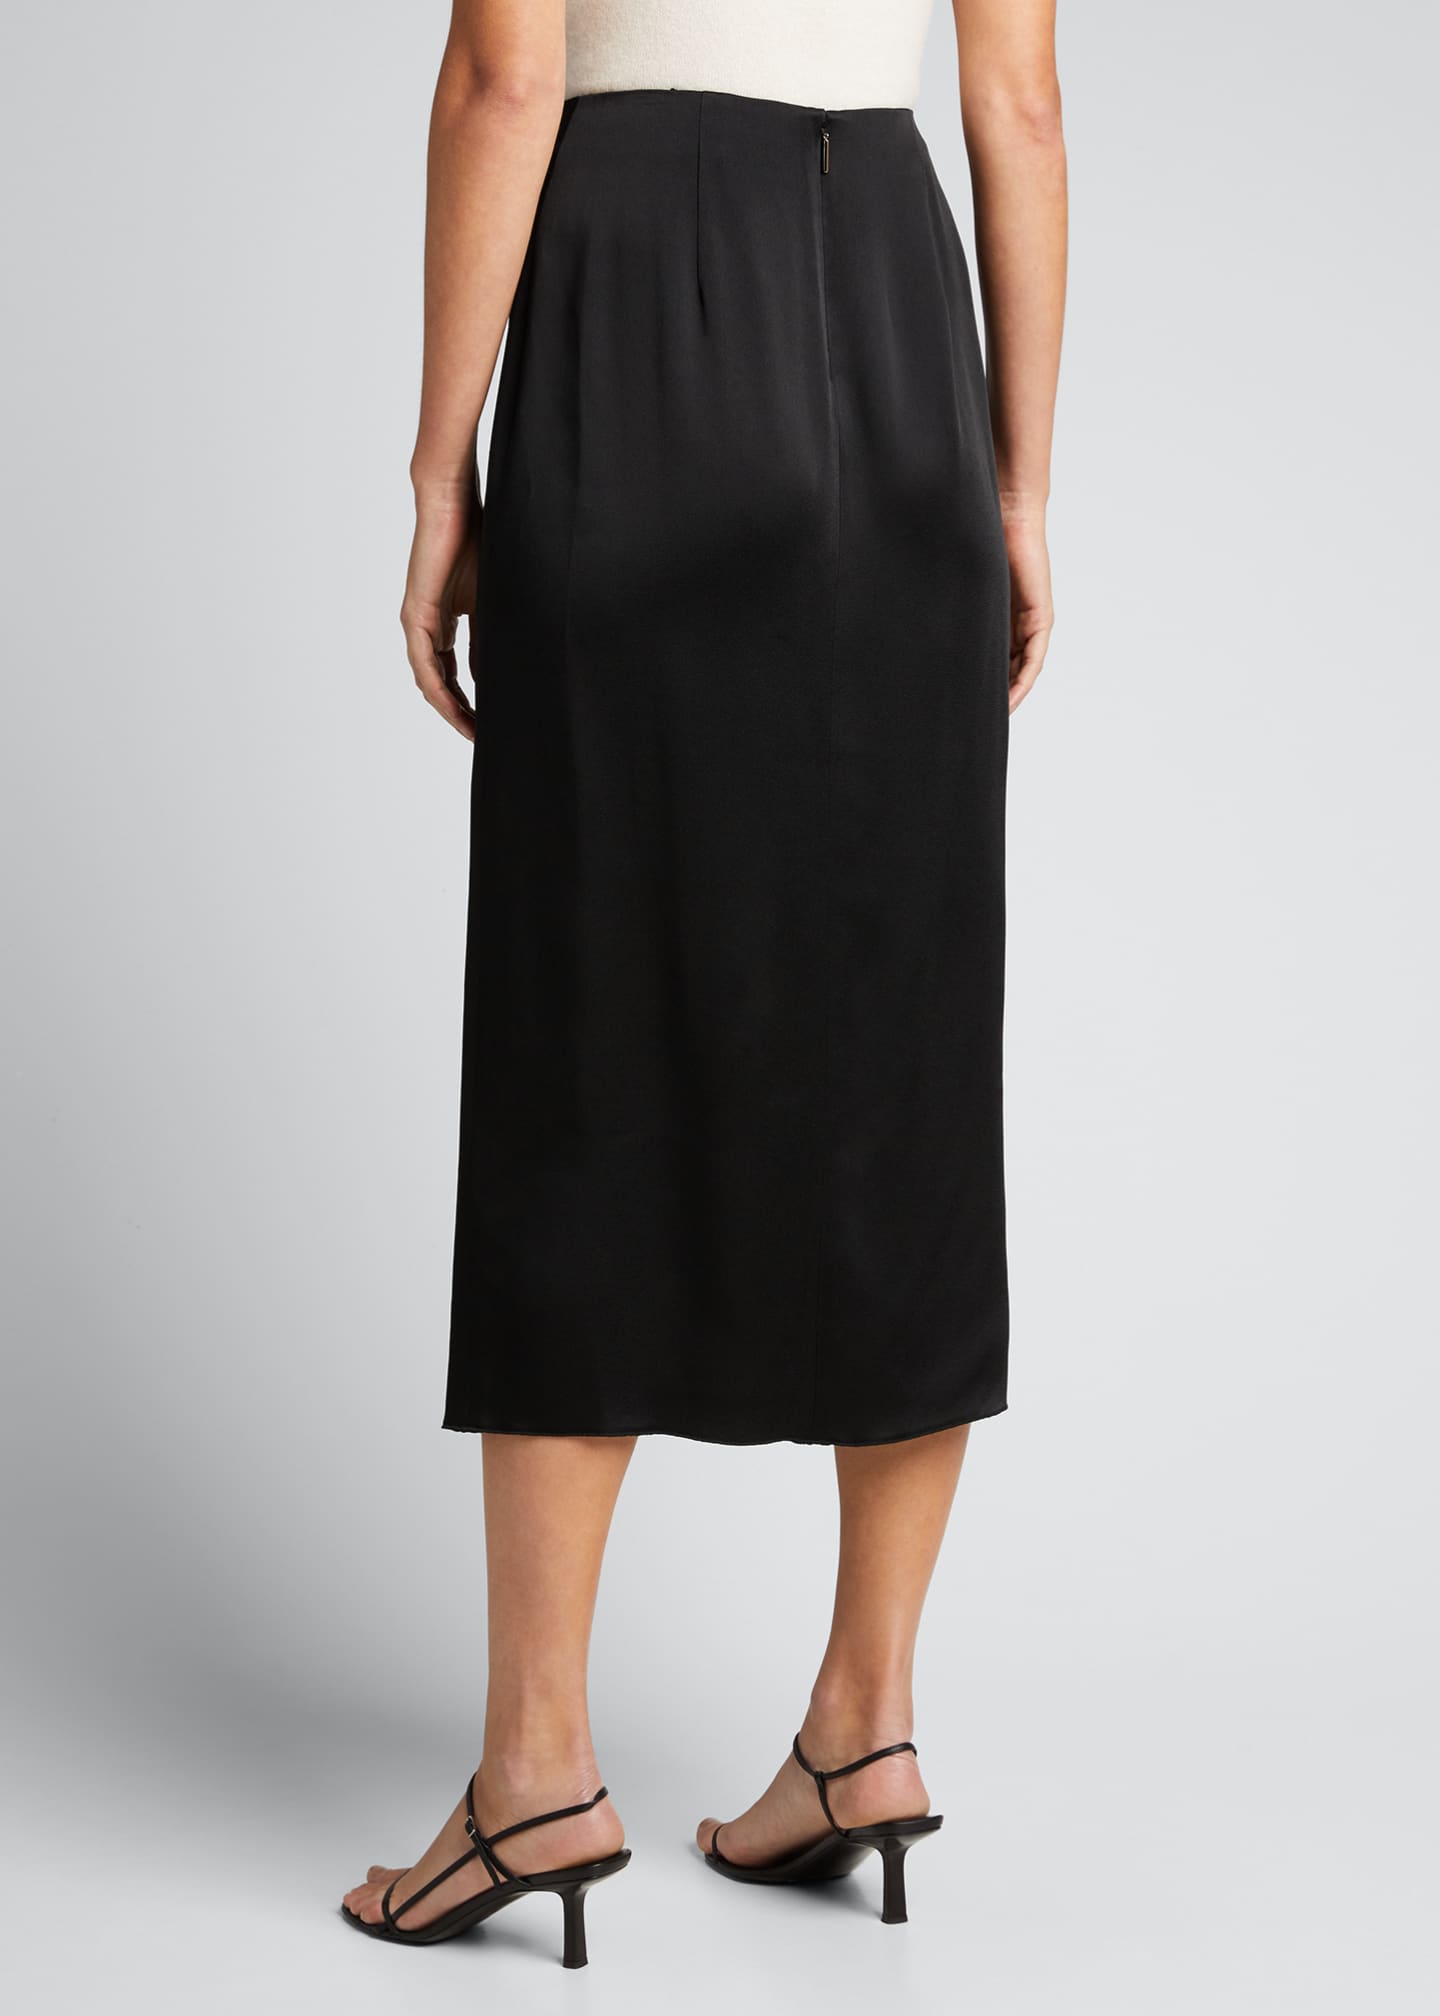 Jason Wu Collection Crepe Satin Midi Skirt w/ Front Slits - Bergdorf ...